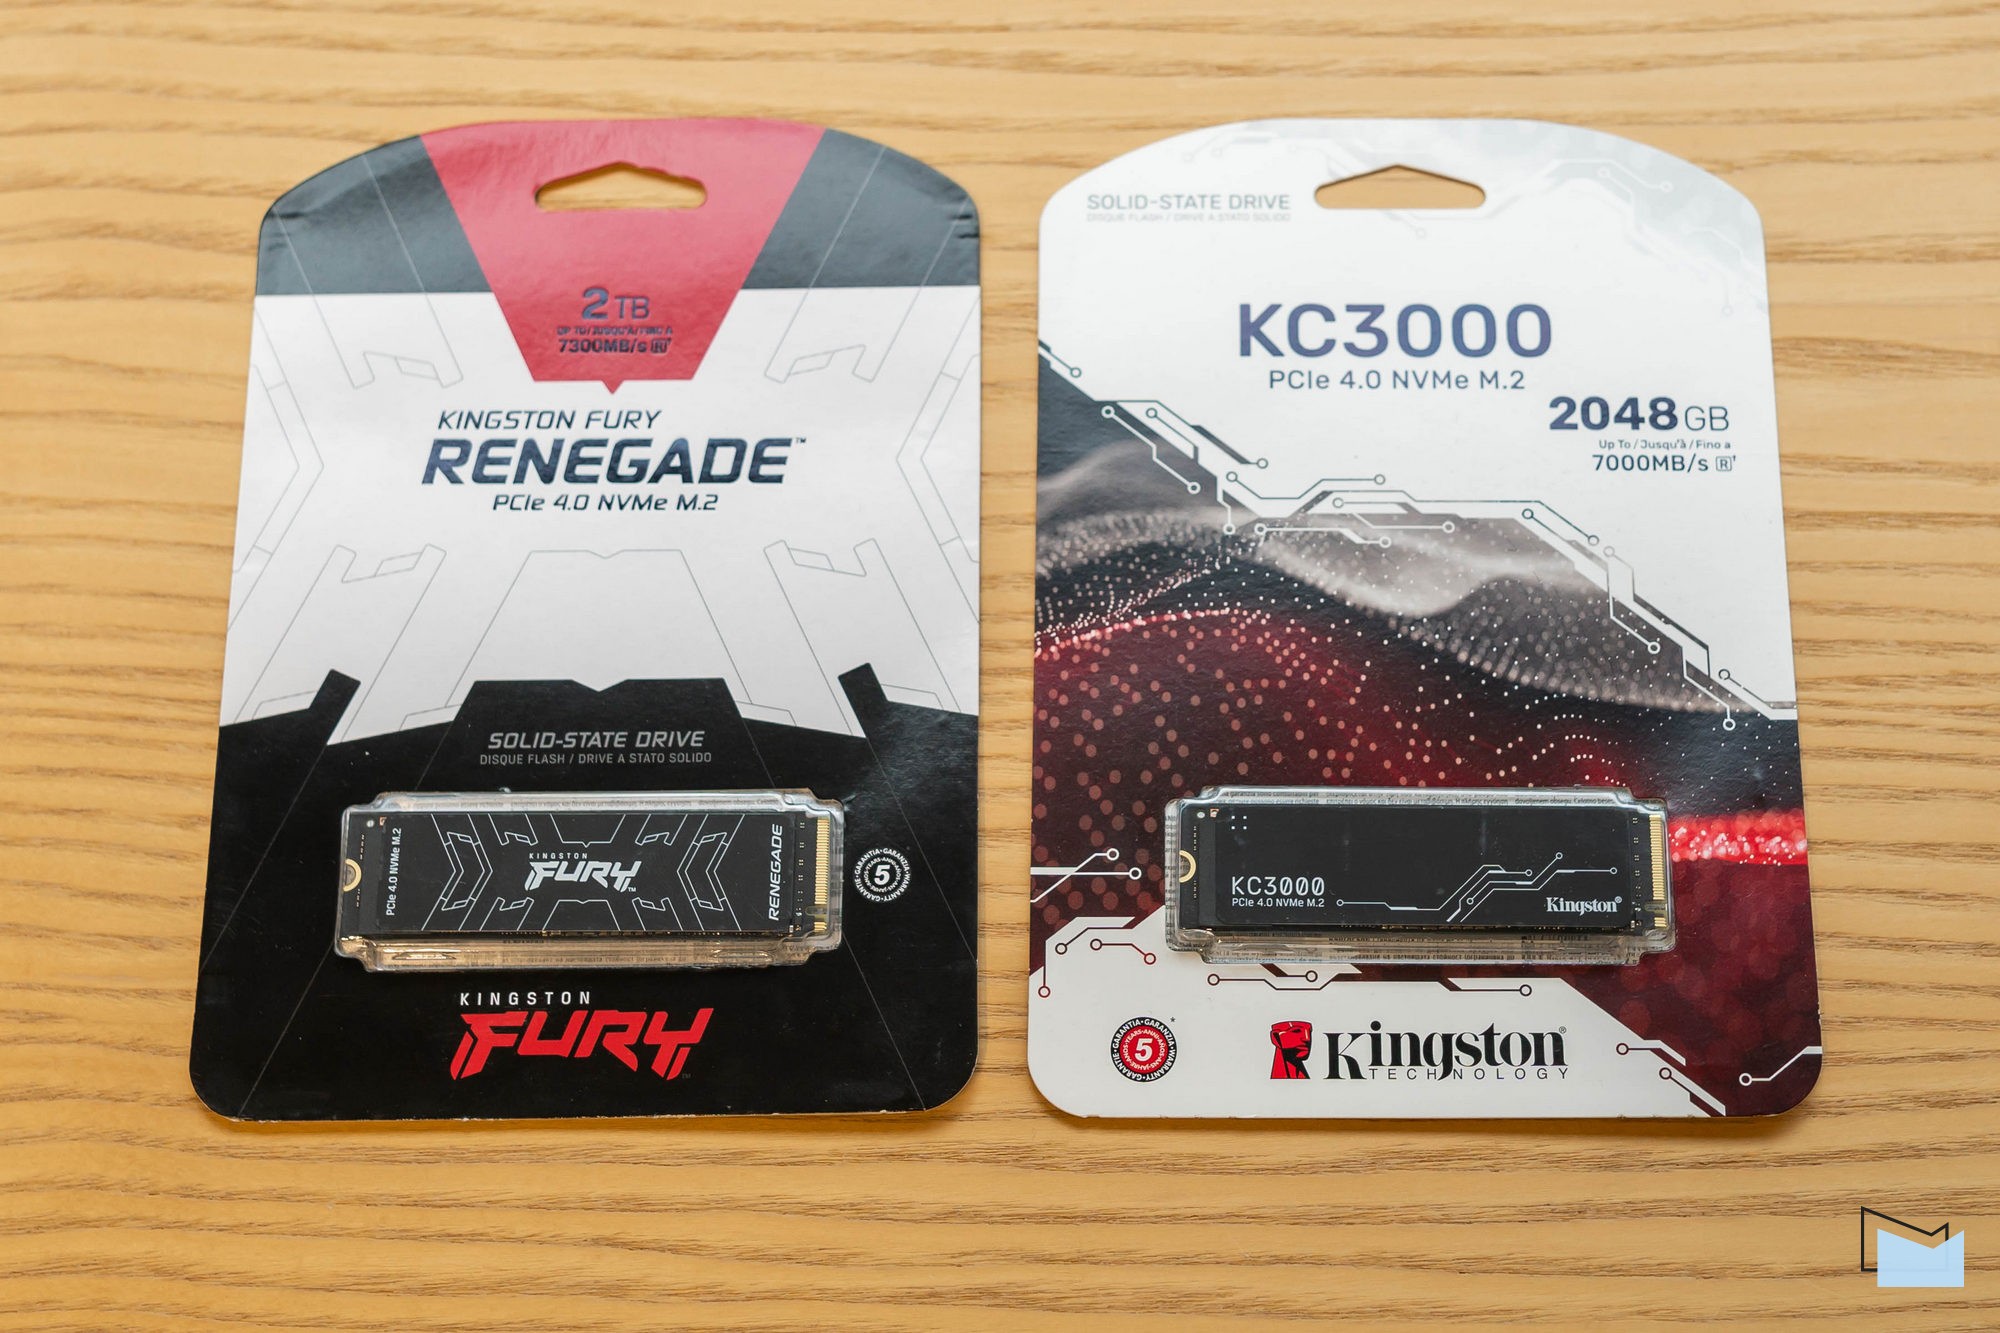 Kingston KC 3000 and Kingston FURY Renegade box